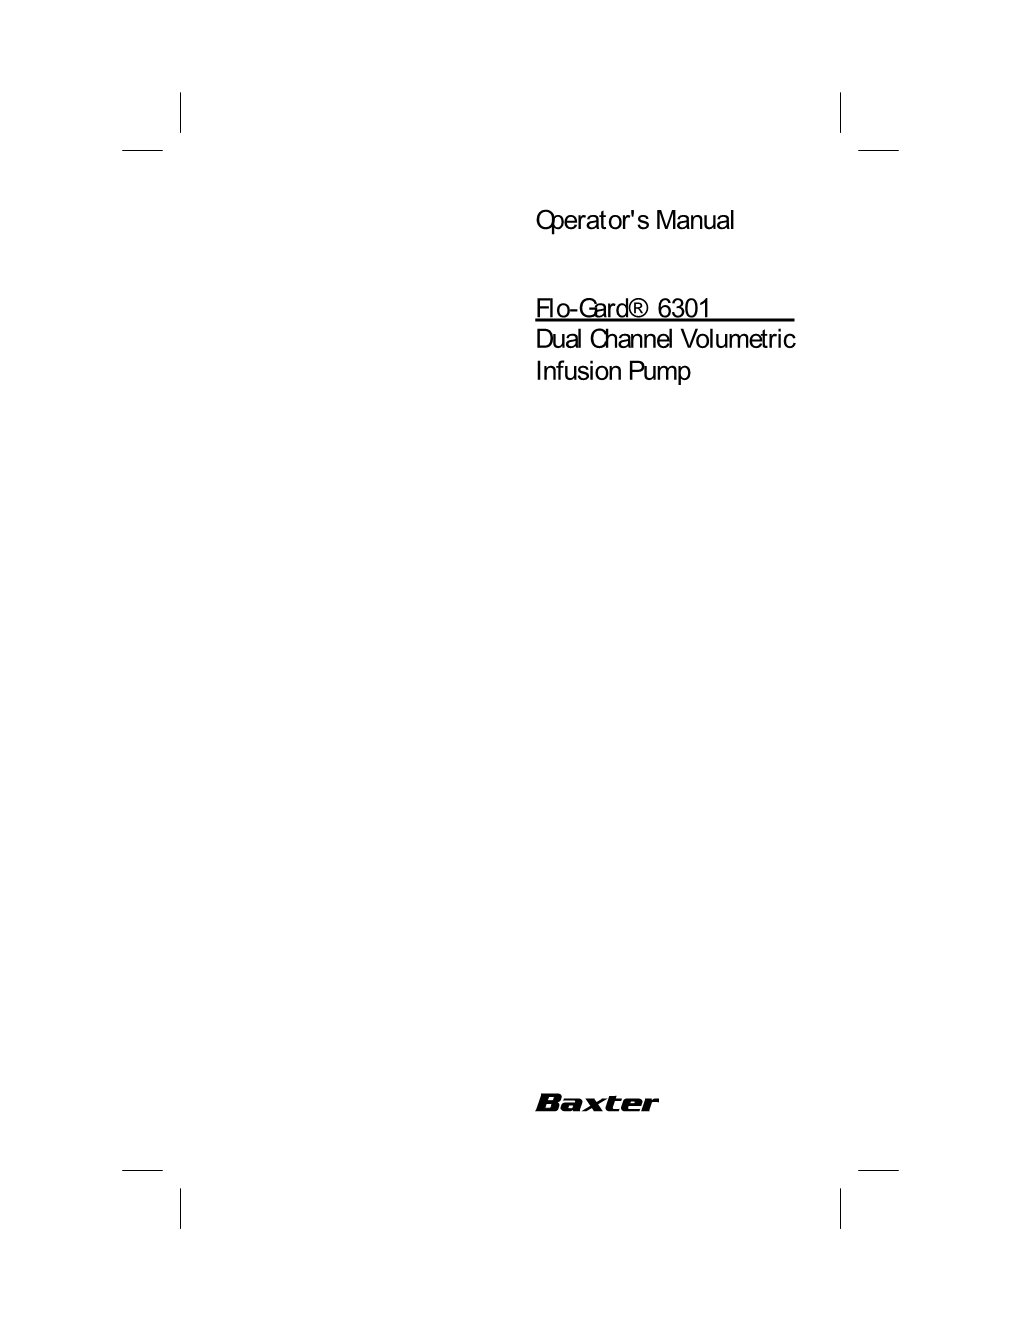 Operator's Manual Flo-Gard® 6301 Dual Channel Volumetric Infusion